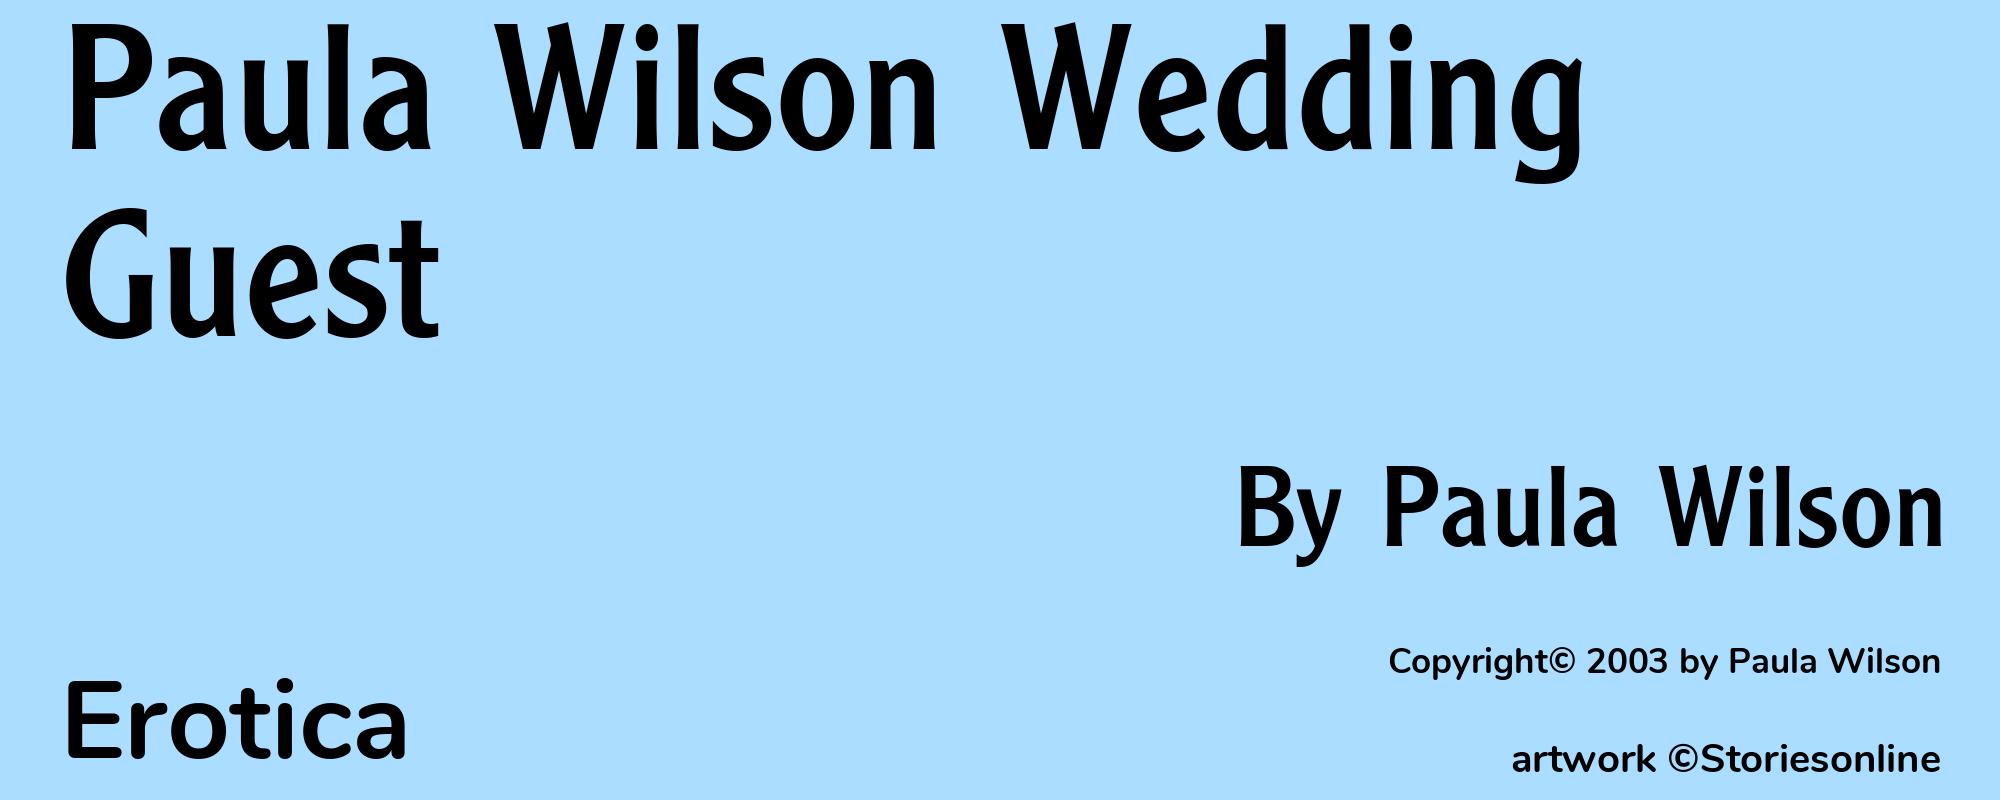 Paula Wilson Wedding Guest - Cover